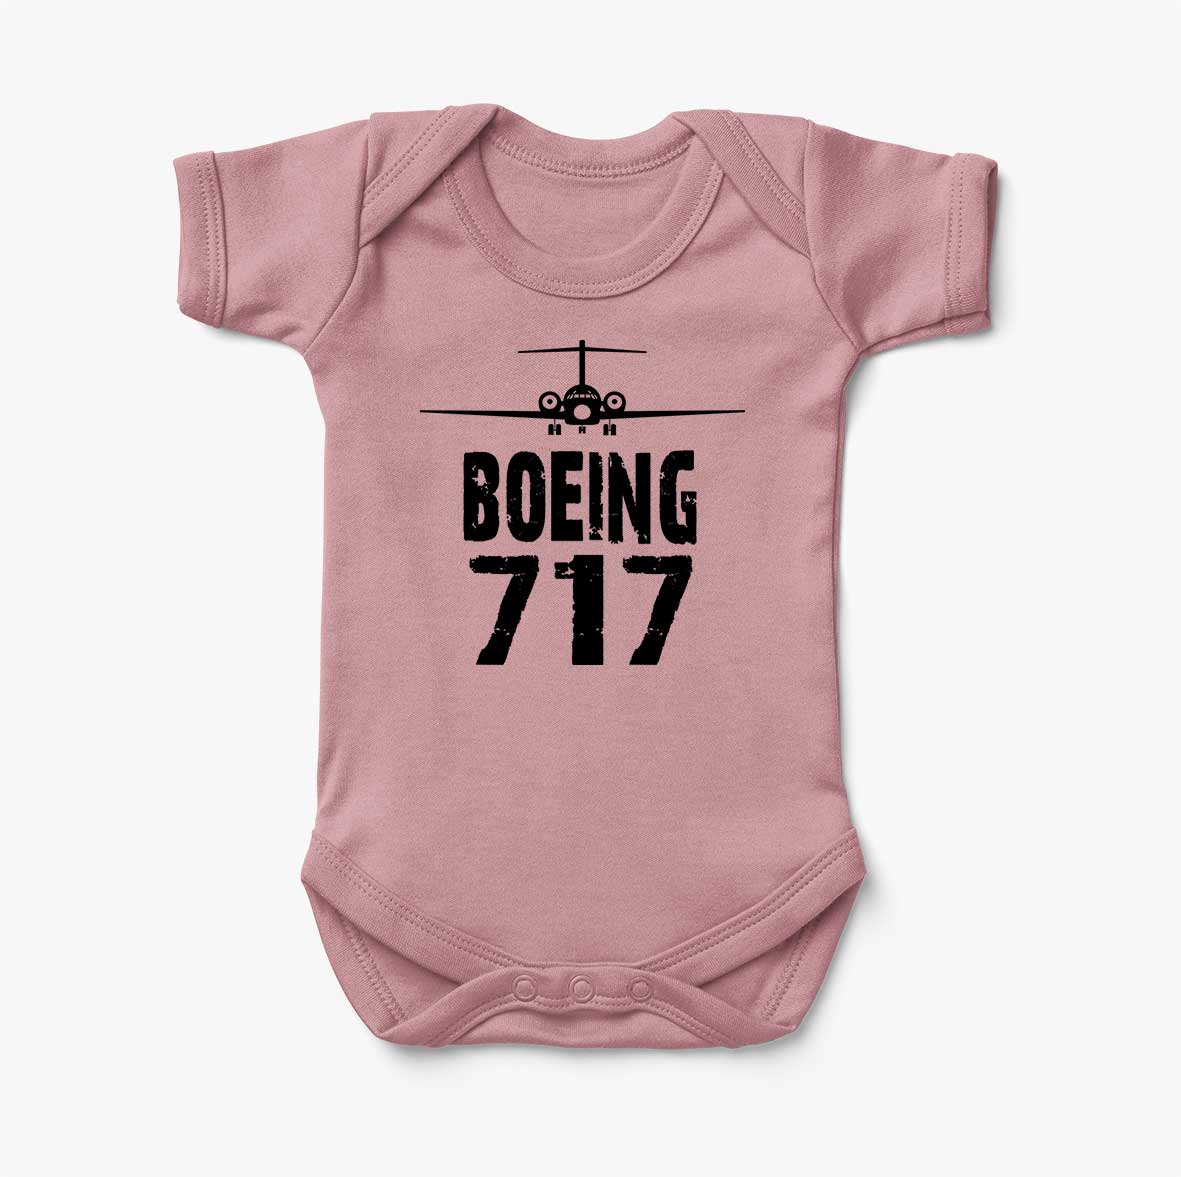 Boeing 717 & Plane Designed Baby Bodysuits